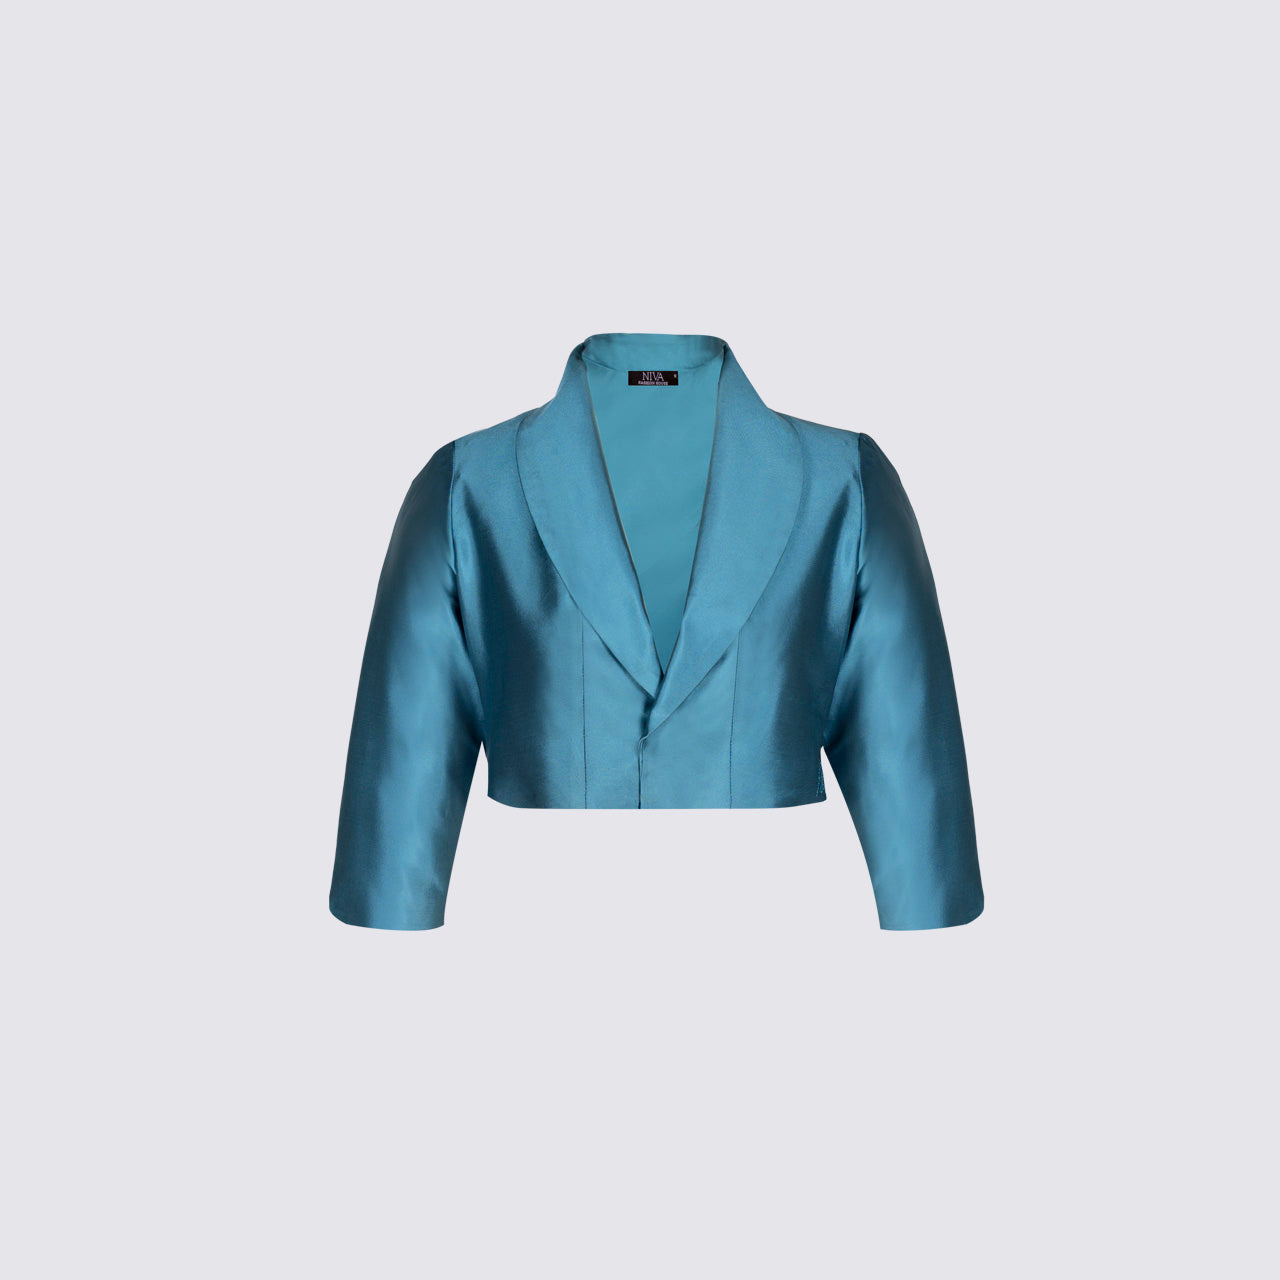 Delight - Cropped Blue Blazer Jacket